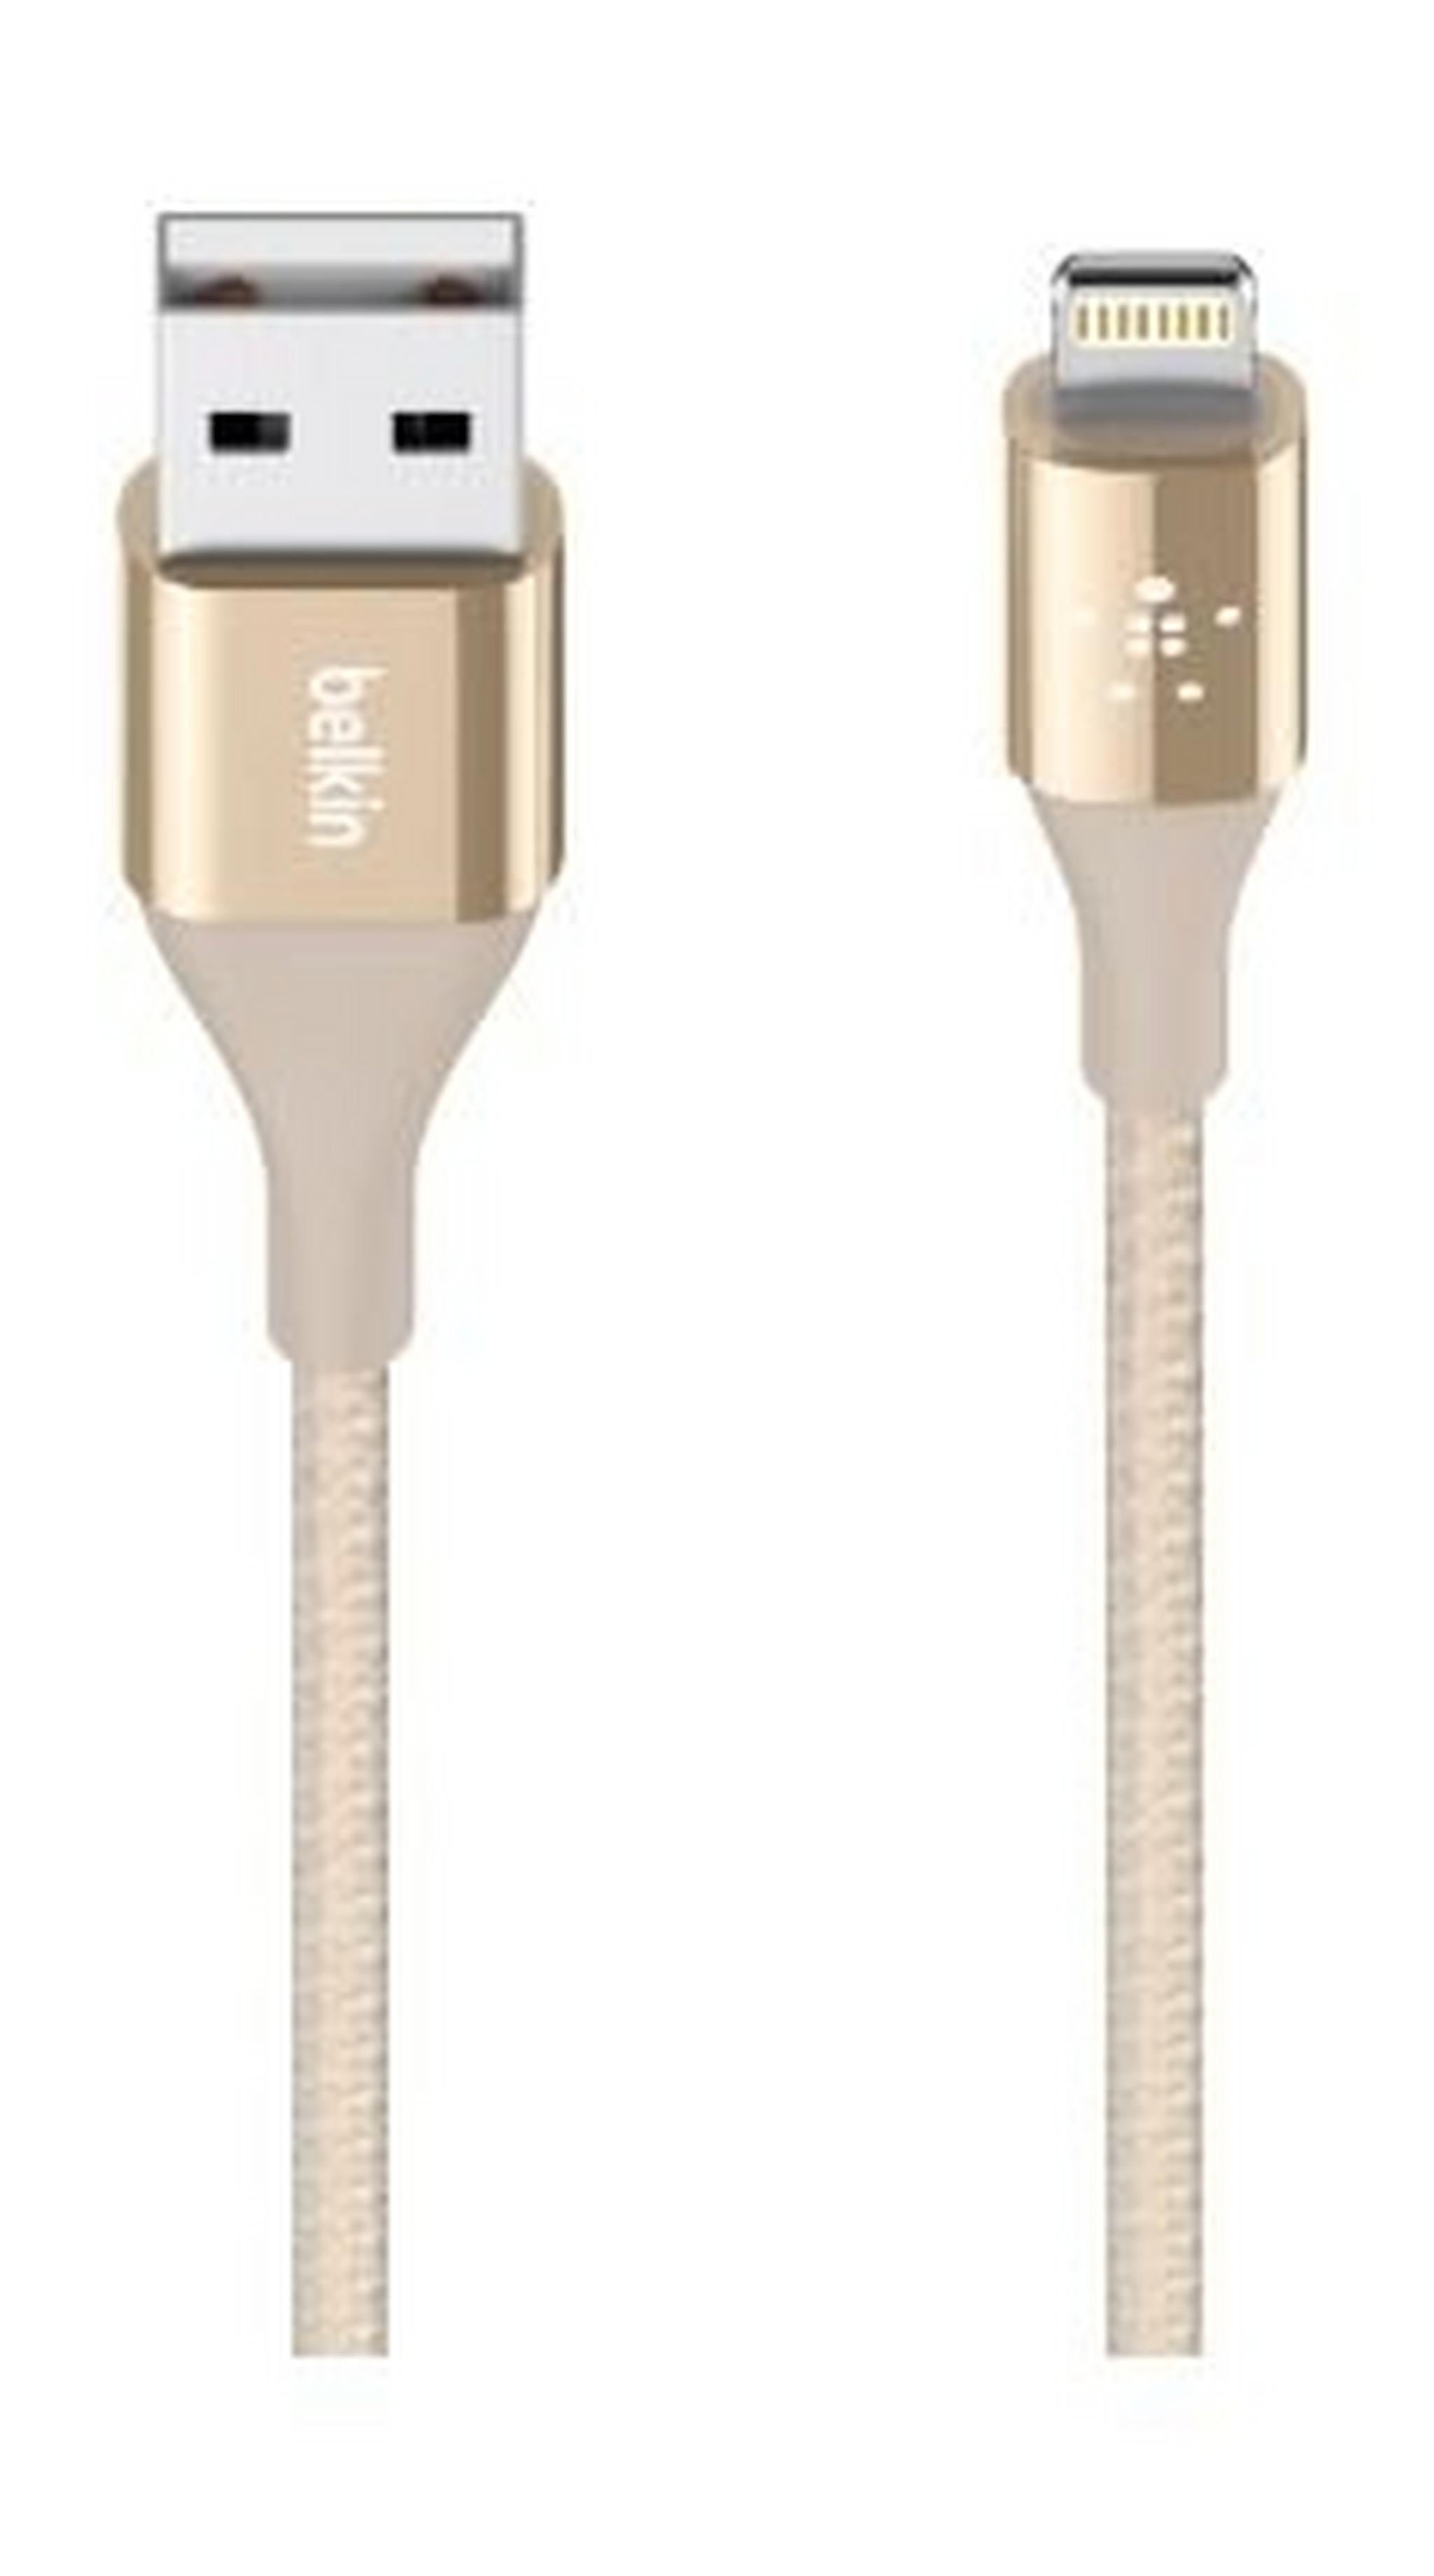 Belkin 1.2M Premium DuraTek Lightning to USB Cable - Gold